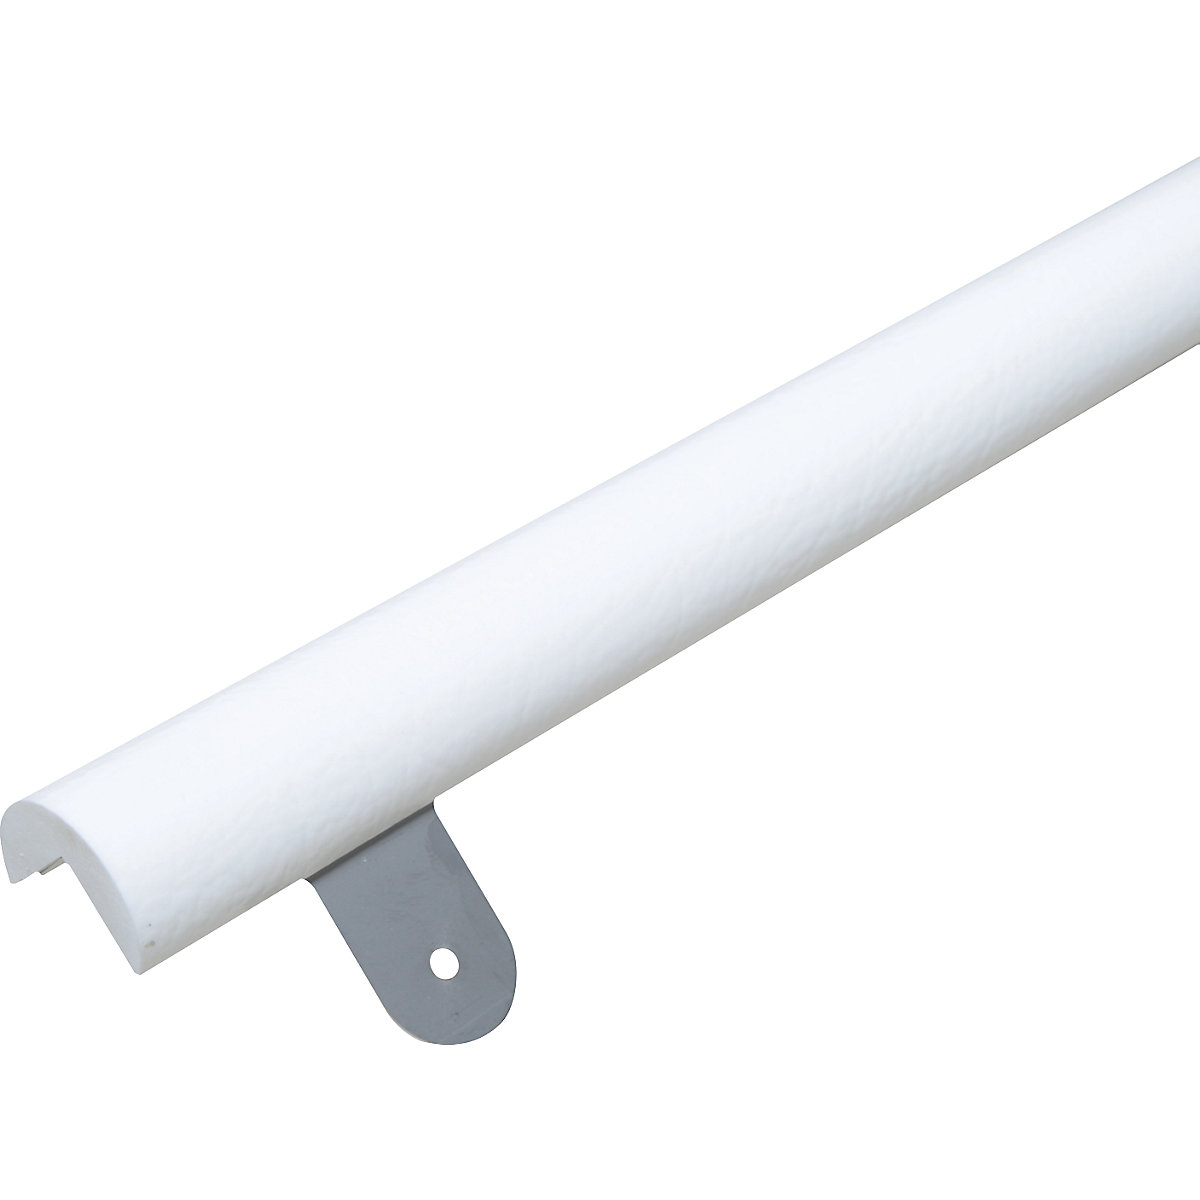 Zaščita vogalov Knuffi®, z montažno letvijo – SHG, tip A, kos 1 m, bele barve-12